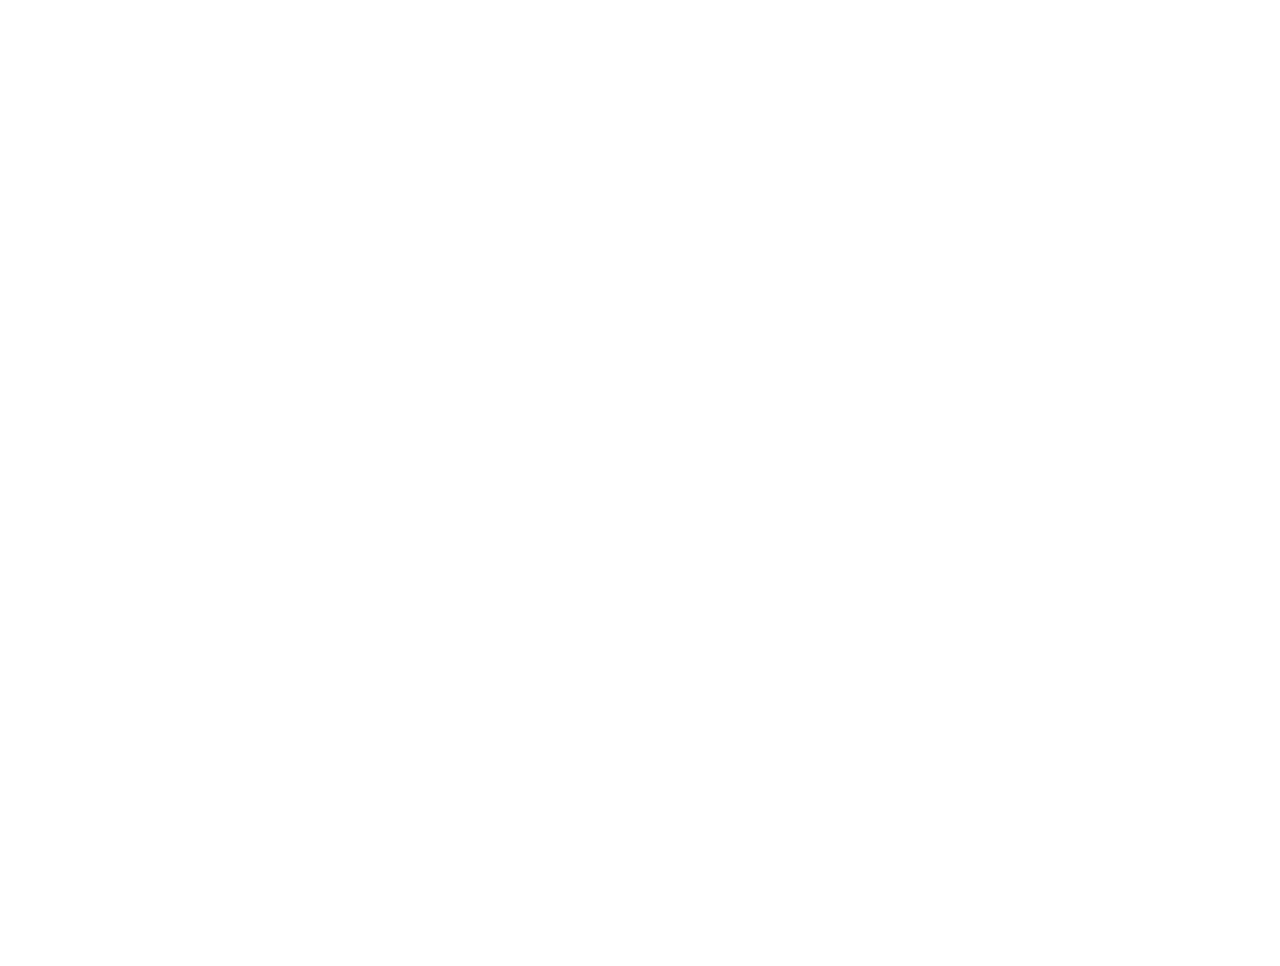 Ferris contracting llc's logo